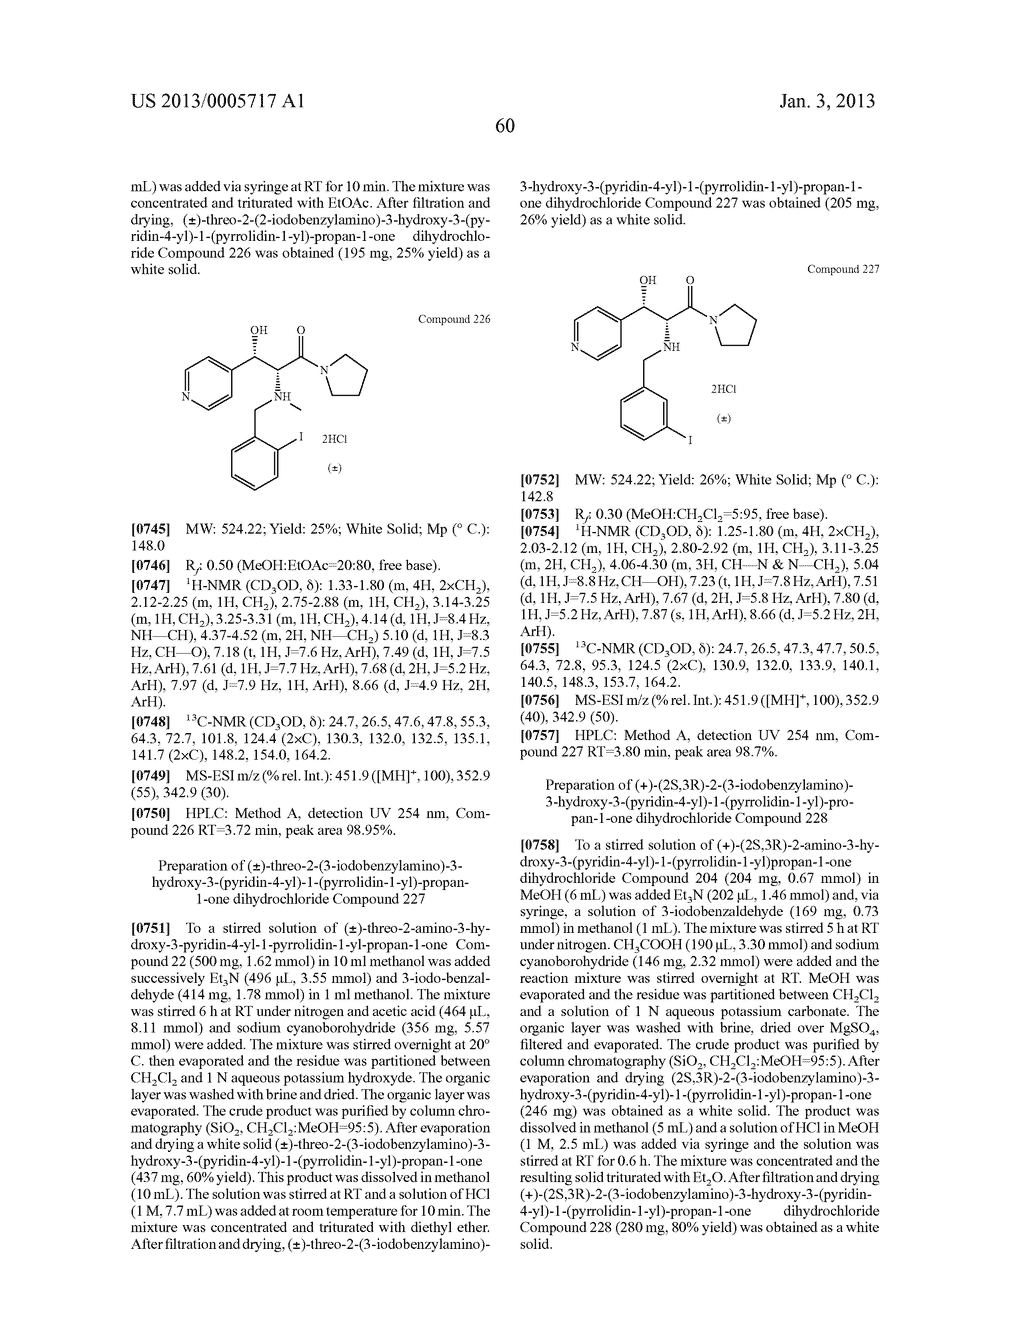 3-ARYL-3-HYDROXY-2-AMINO-PROPIONIC ACID AMIDES,     3-HETEROARYL-3-HYDROXY-2-AMINO-PROPIONIC ACID AMIDES AND RELATED     COMPOUNDS HAVING ANALGESIC AND/OR IMMUNO STIMULANT ACTIVITY - diagram, schematic, and image 61